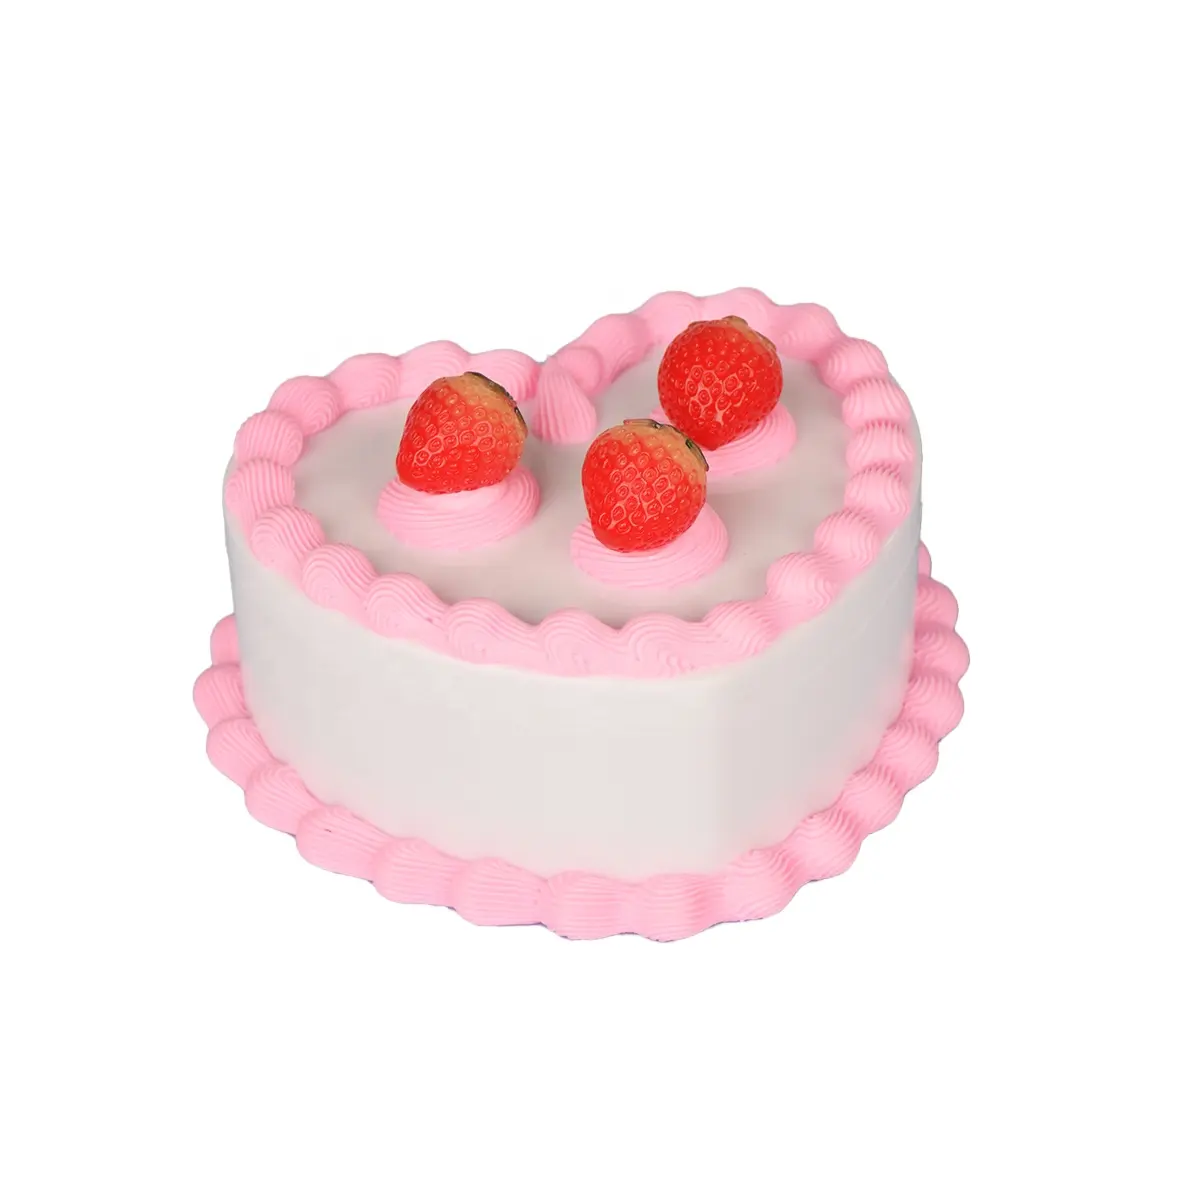 Cute Imitation Cupcakes Fake Food Heart Shape Pink Cream Strawberry Gift Cherry Cake Model Dessert Table Decoration Jewelry Box